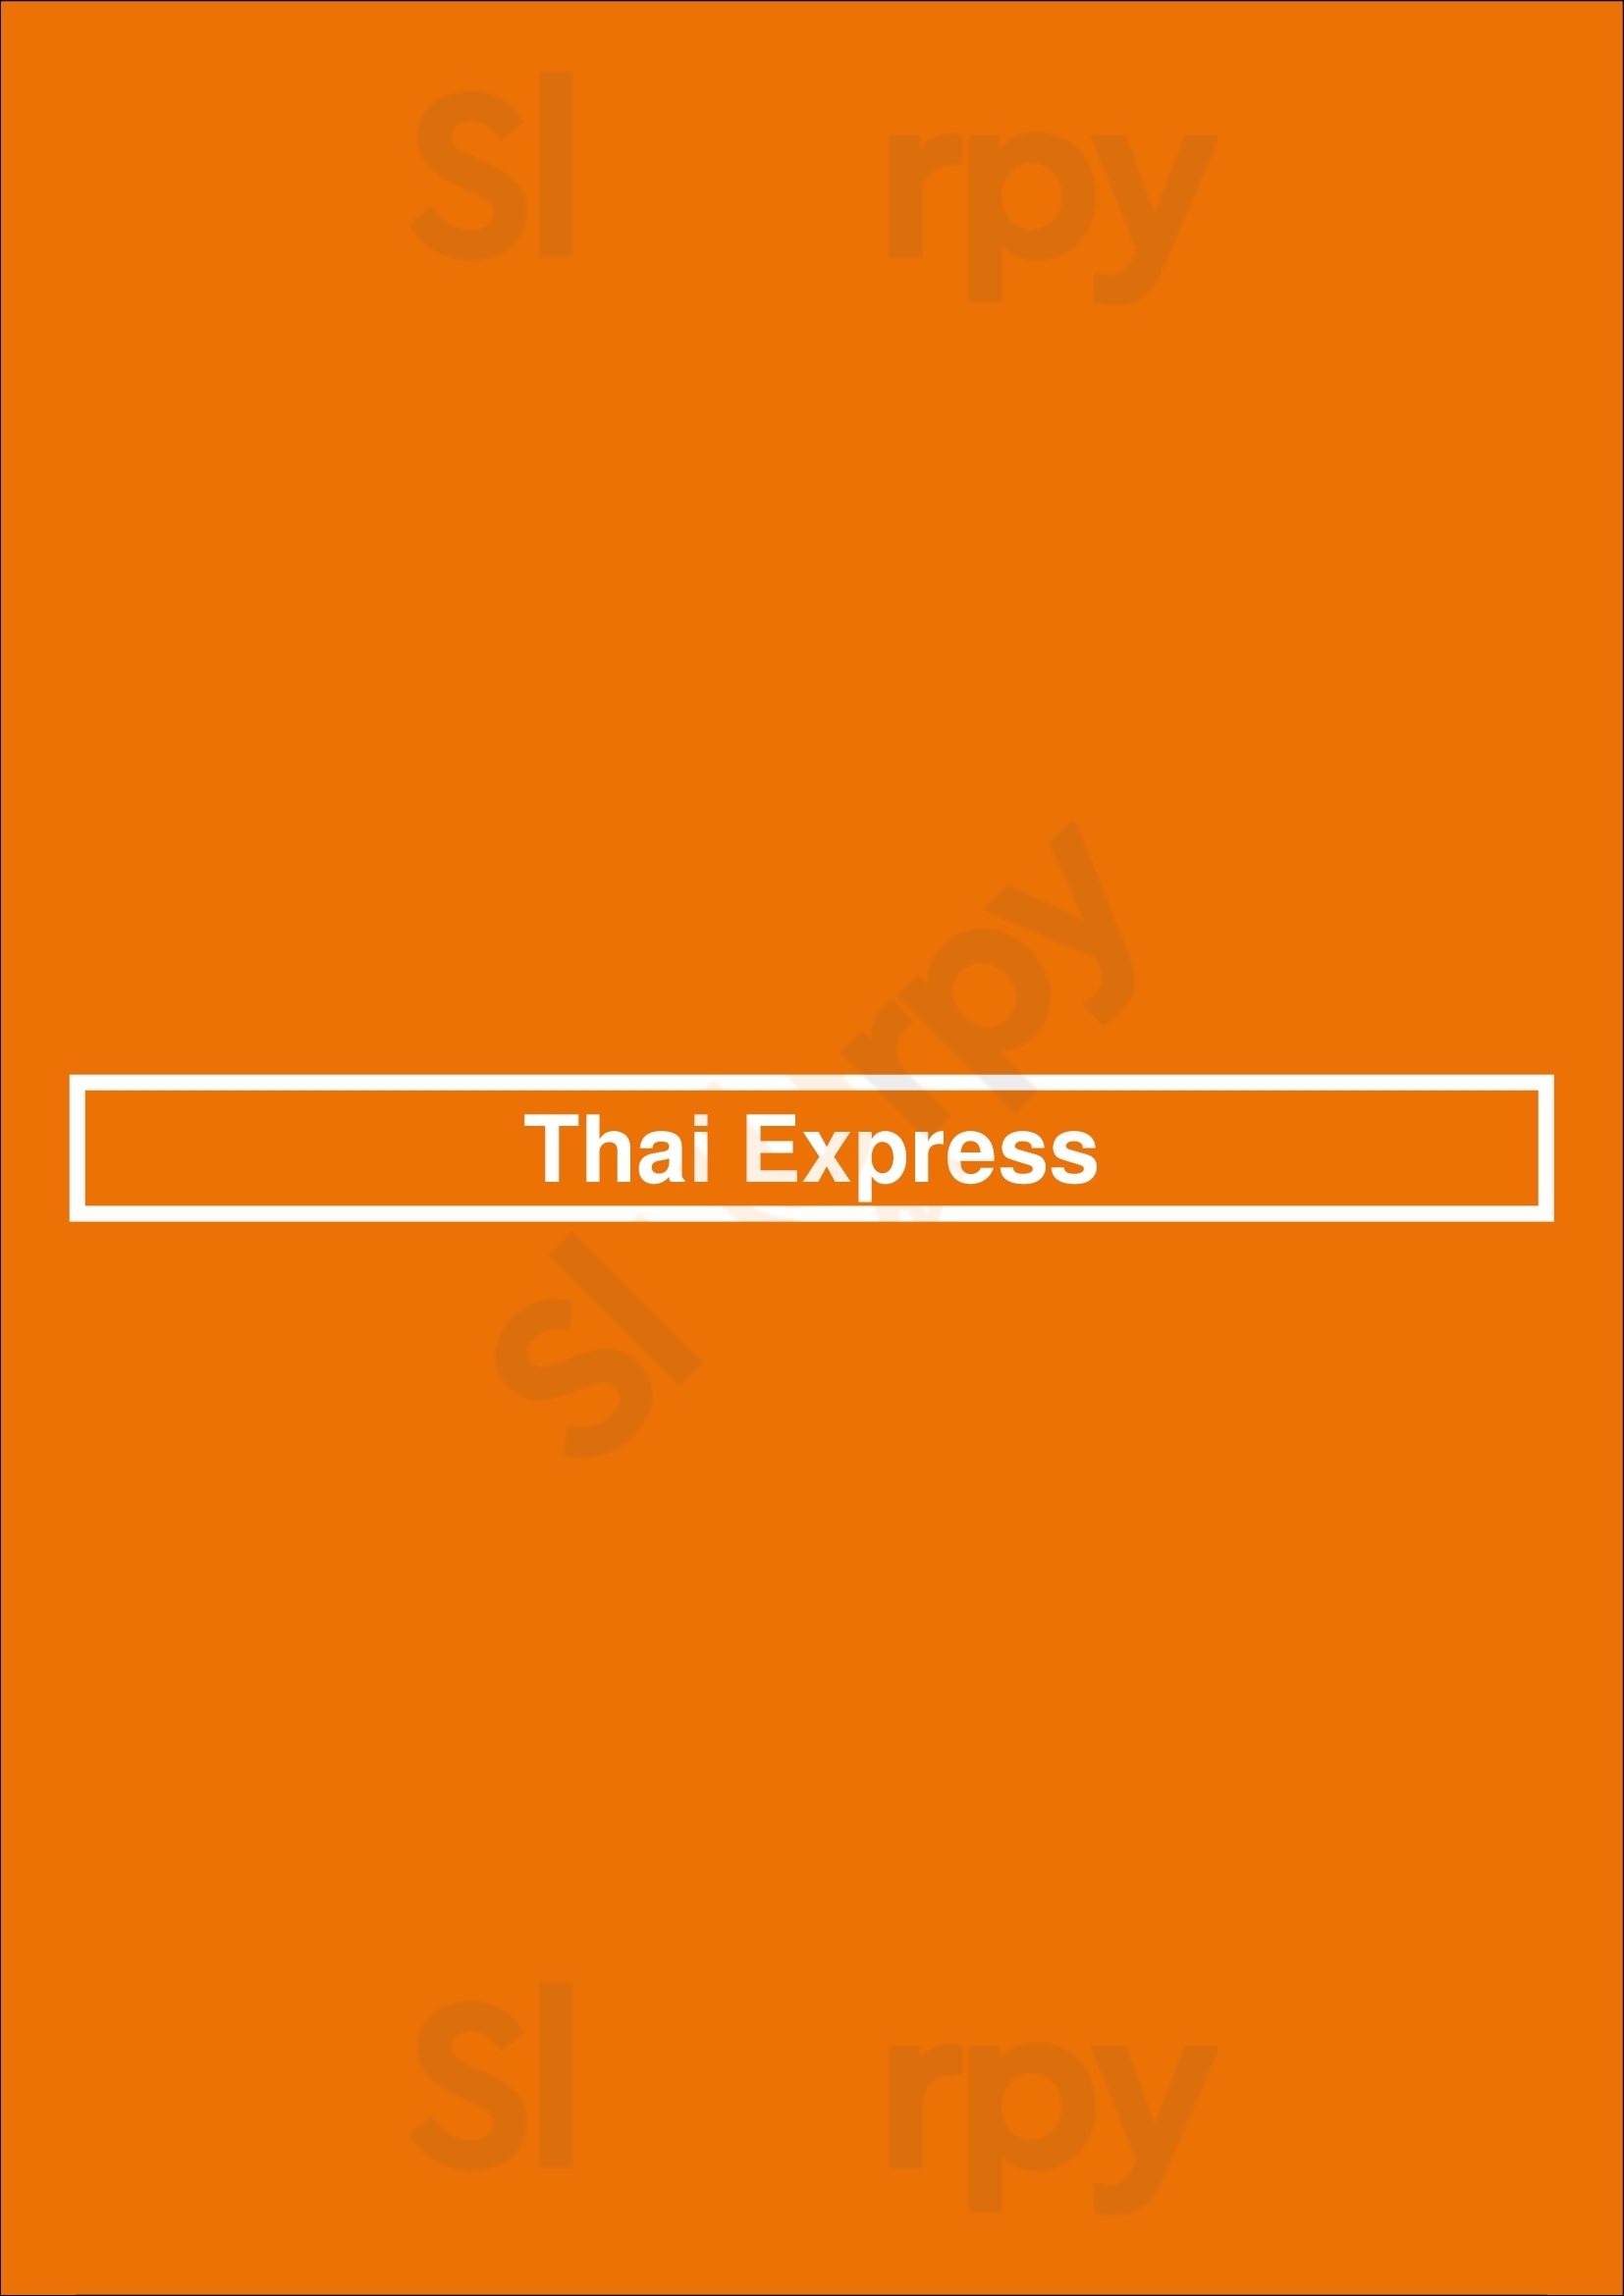 Thai Express Restaurant Etobicoke Toronto Menu - 1